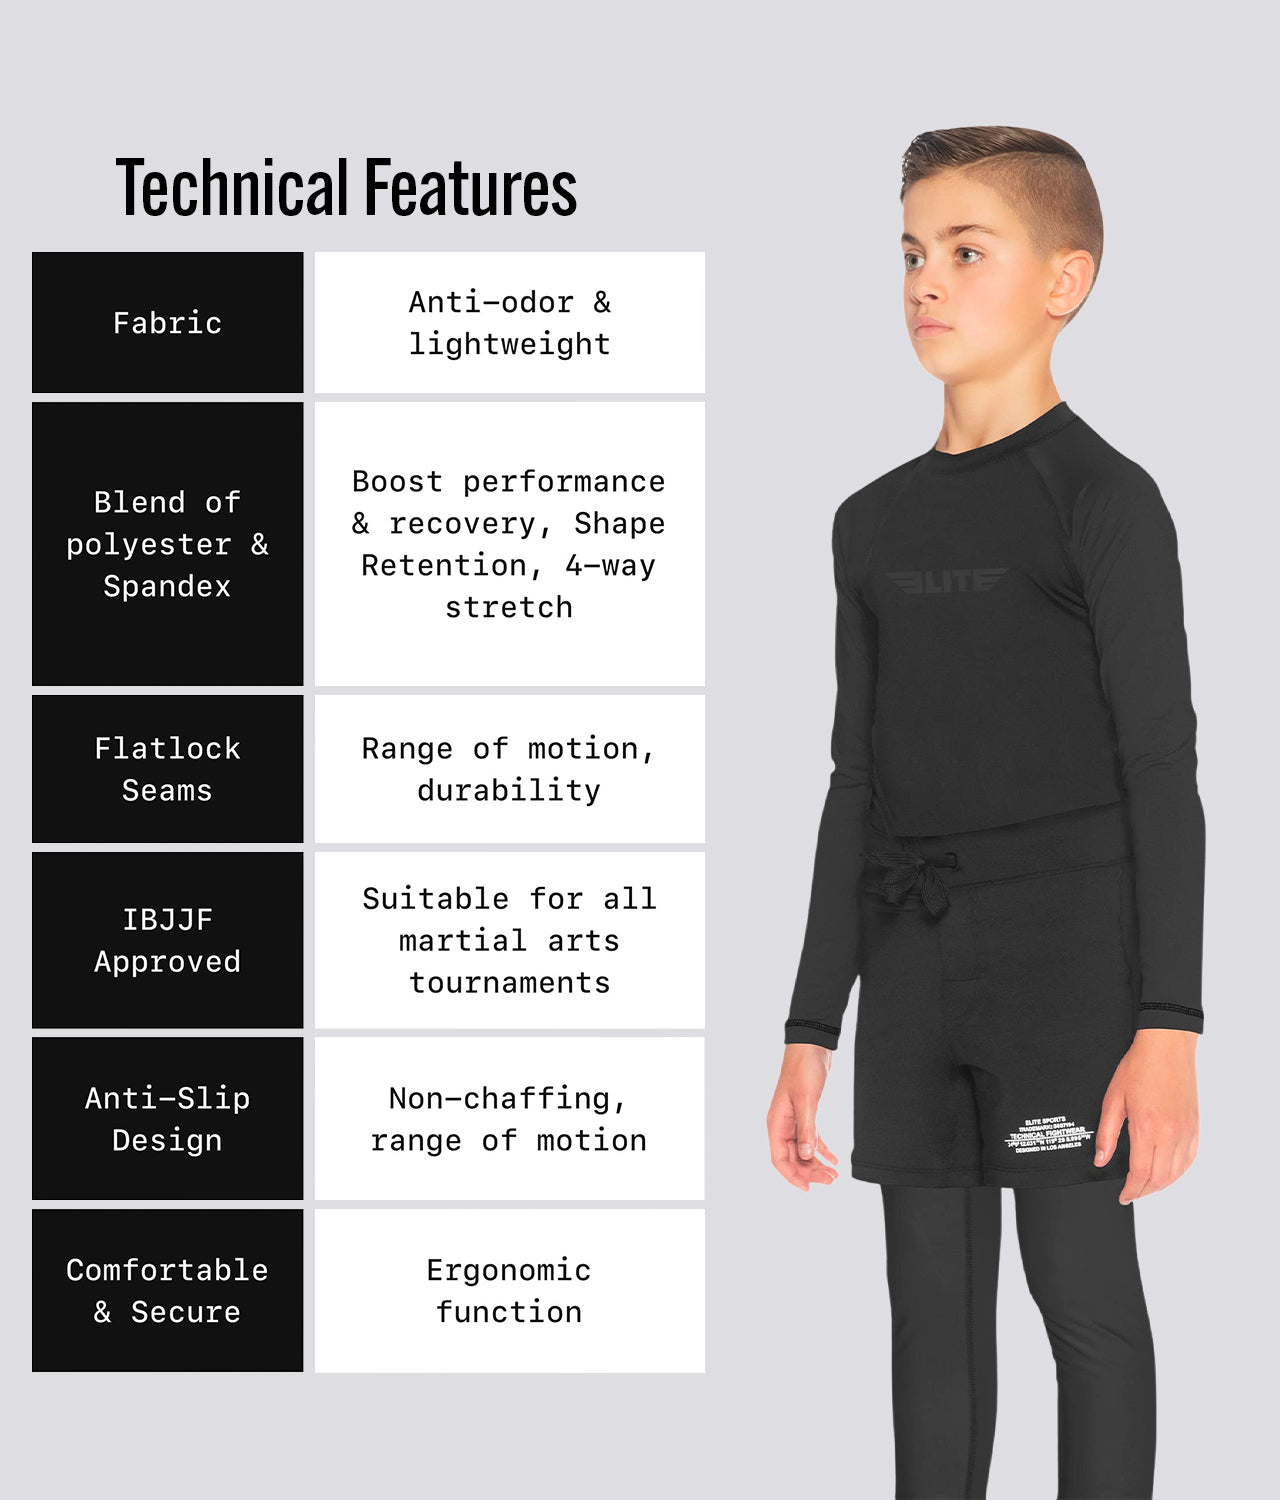 Kids' Standard Black Long Sleeve BJJ Rash Guard